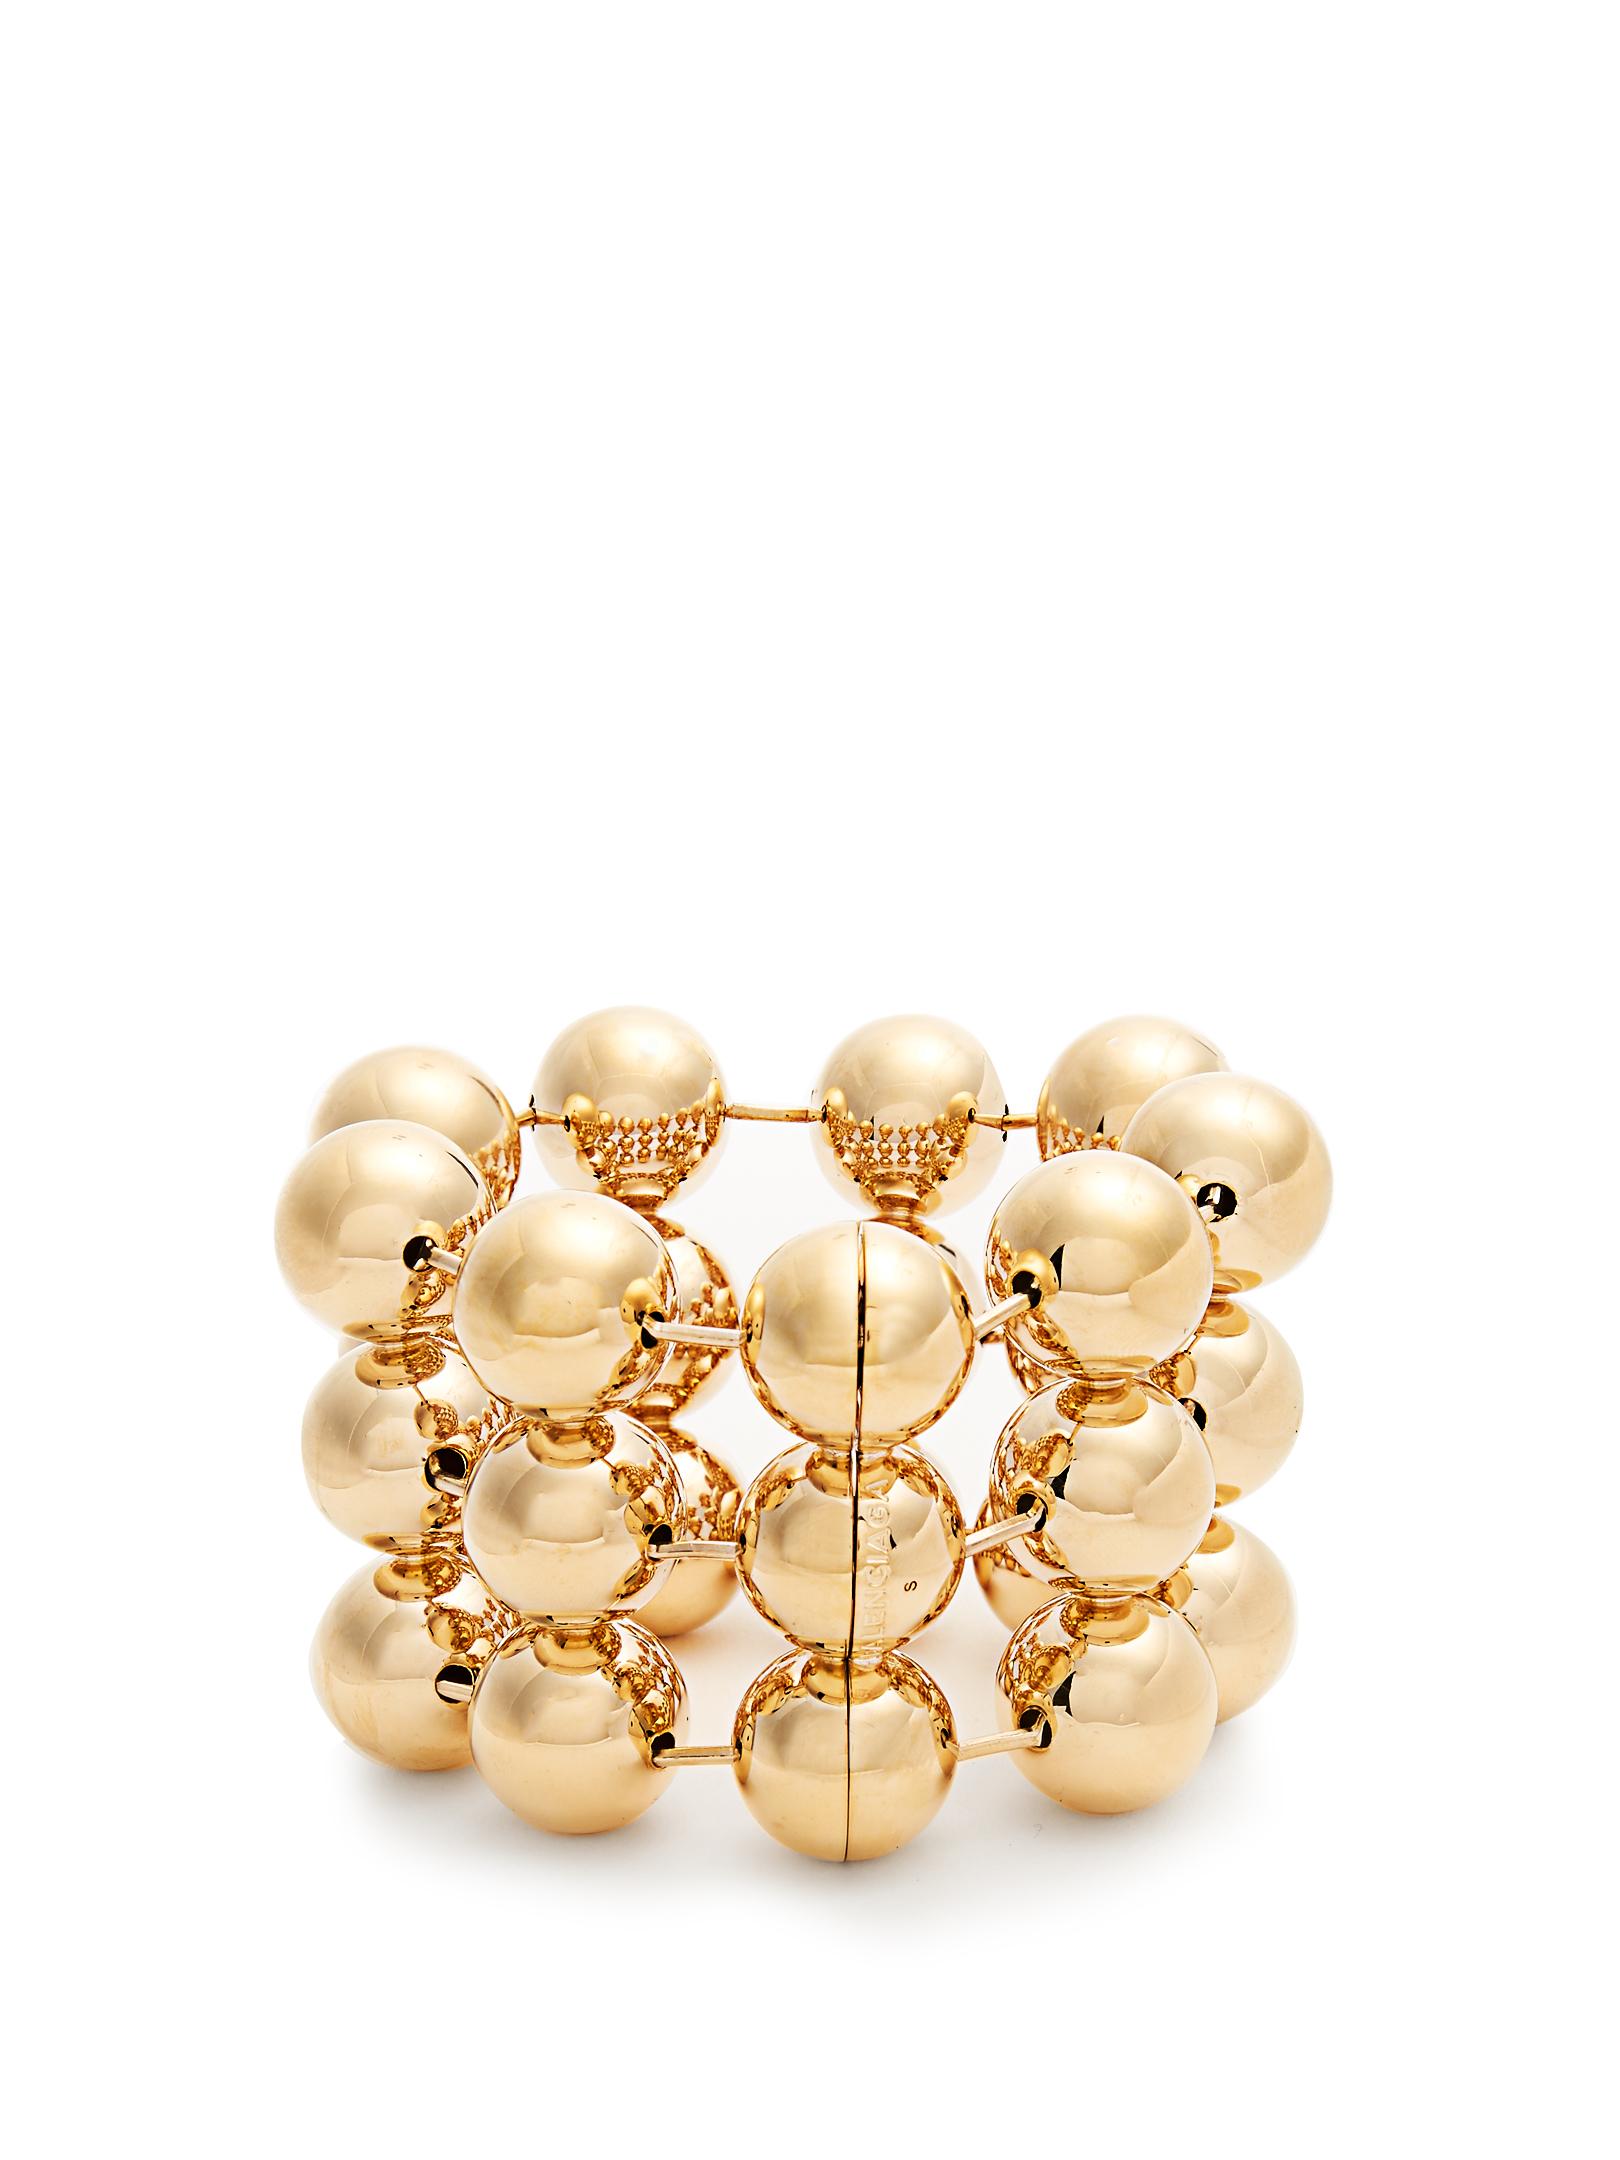 Balenciaga Triple Ball-bead Chain Bracelet in Gold (Metallic) - Lyst